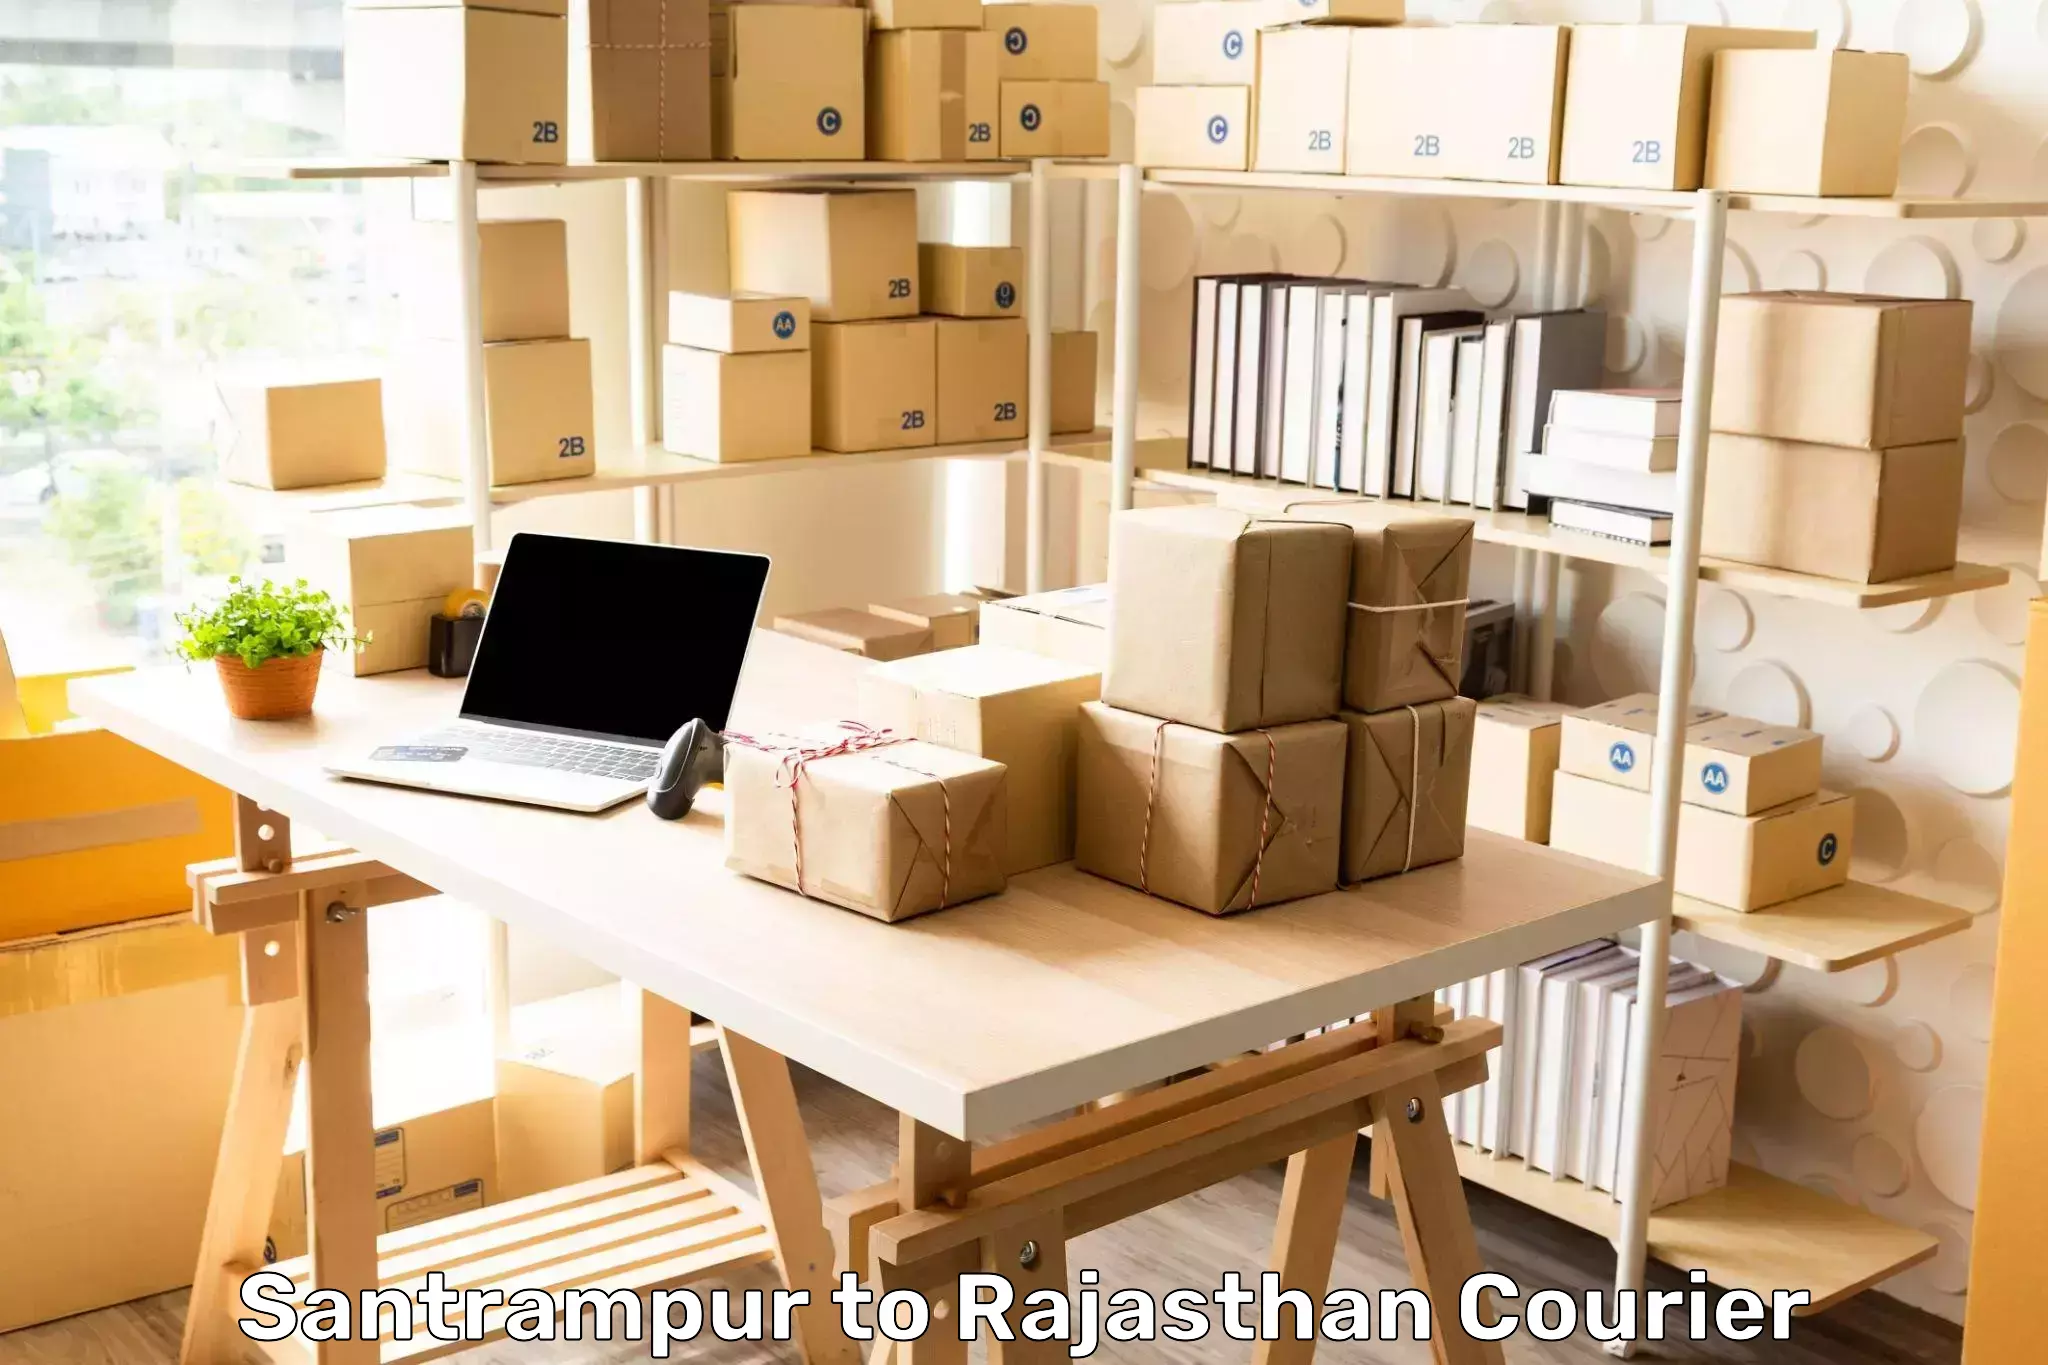 International parcel service Santrampur to Rajasthan